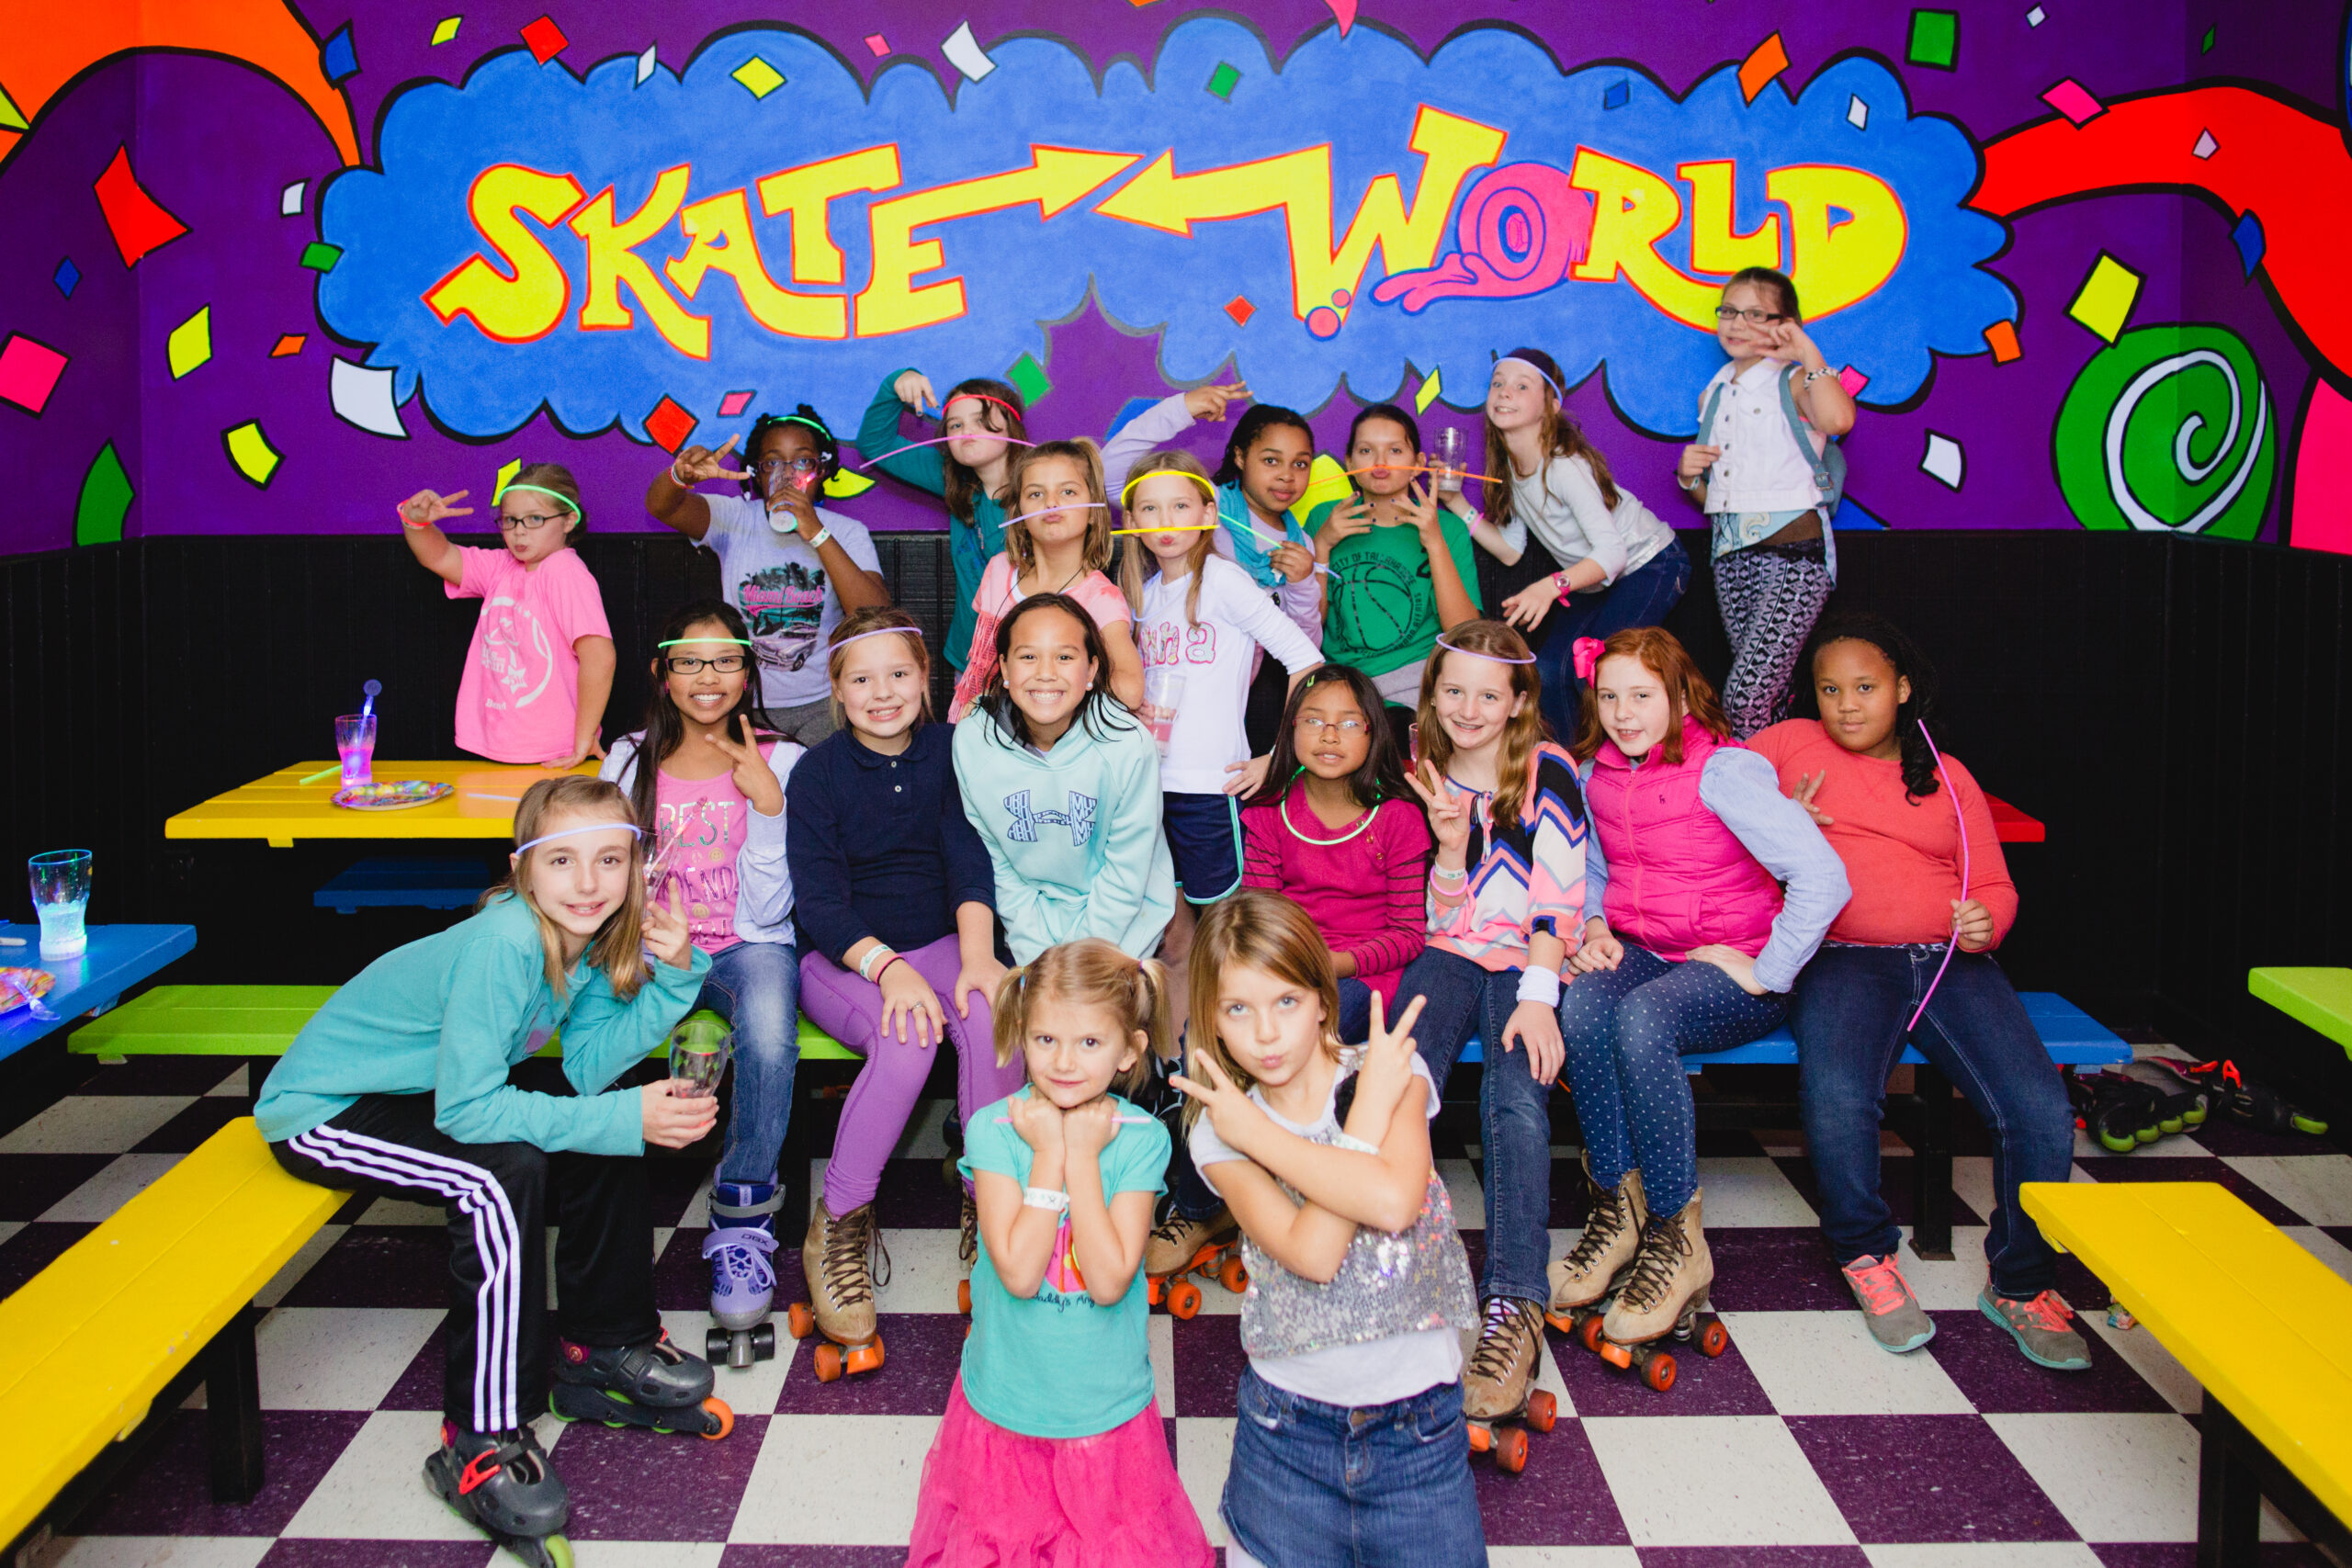 Family Fun at Skate World Center, skating, playground, skates, skate, birthday, birthday party, parties